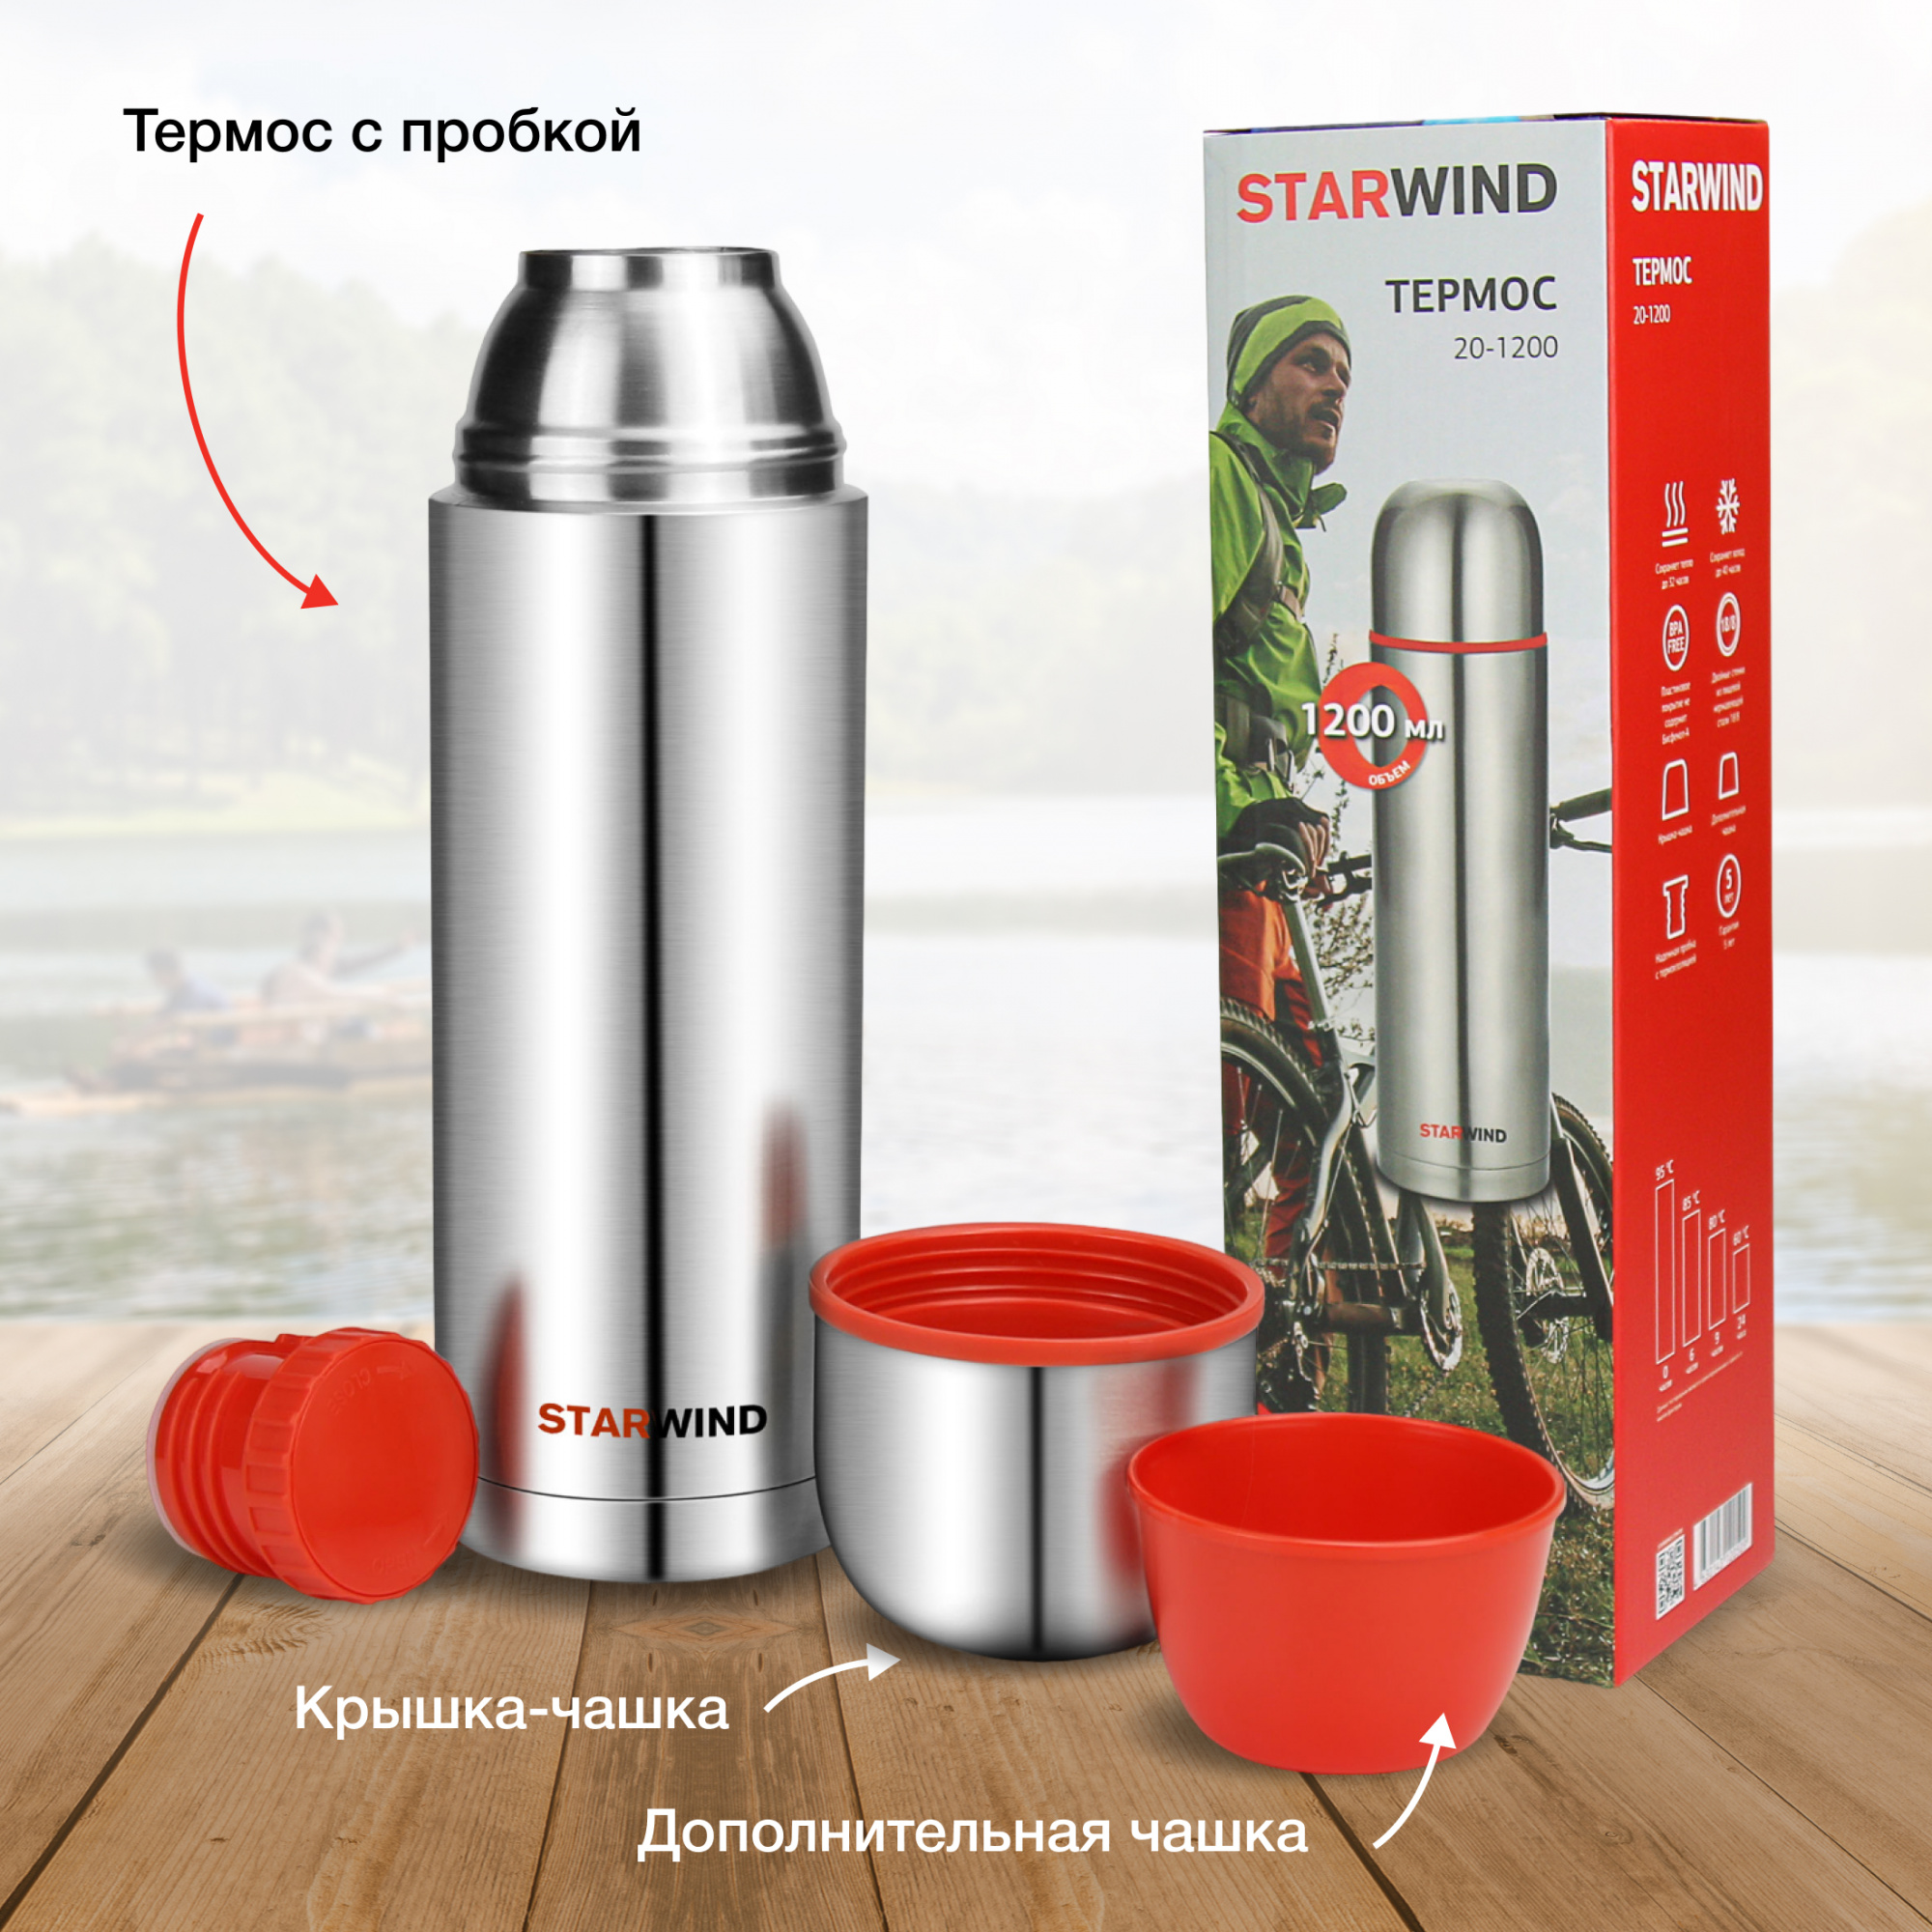 Термос Starwind 20-1200, 1.2л, серебристый/красный от магазина Старвинд